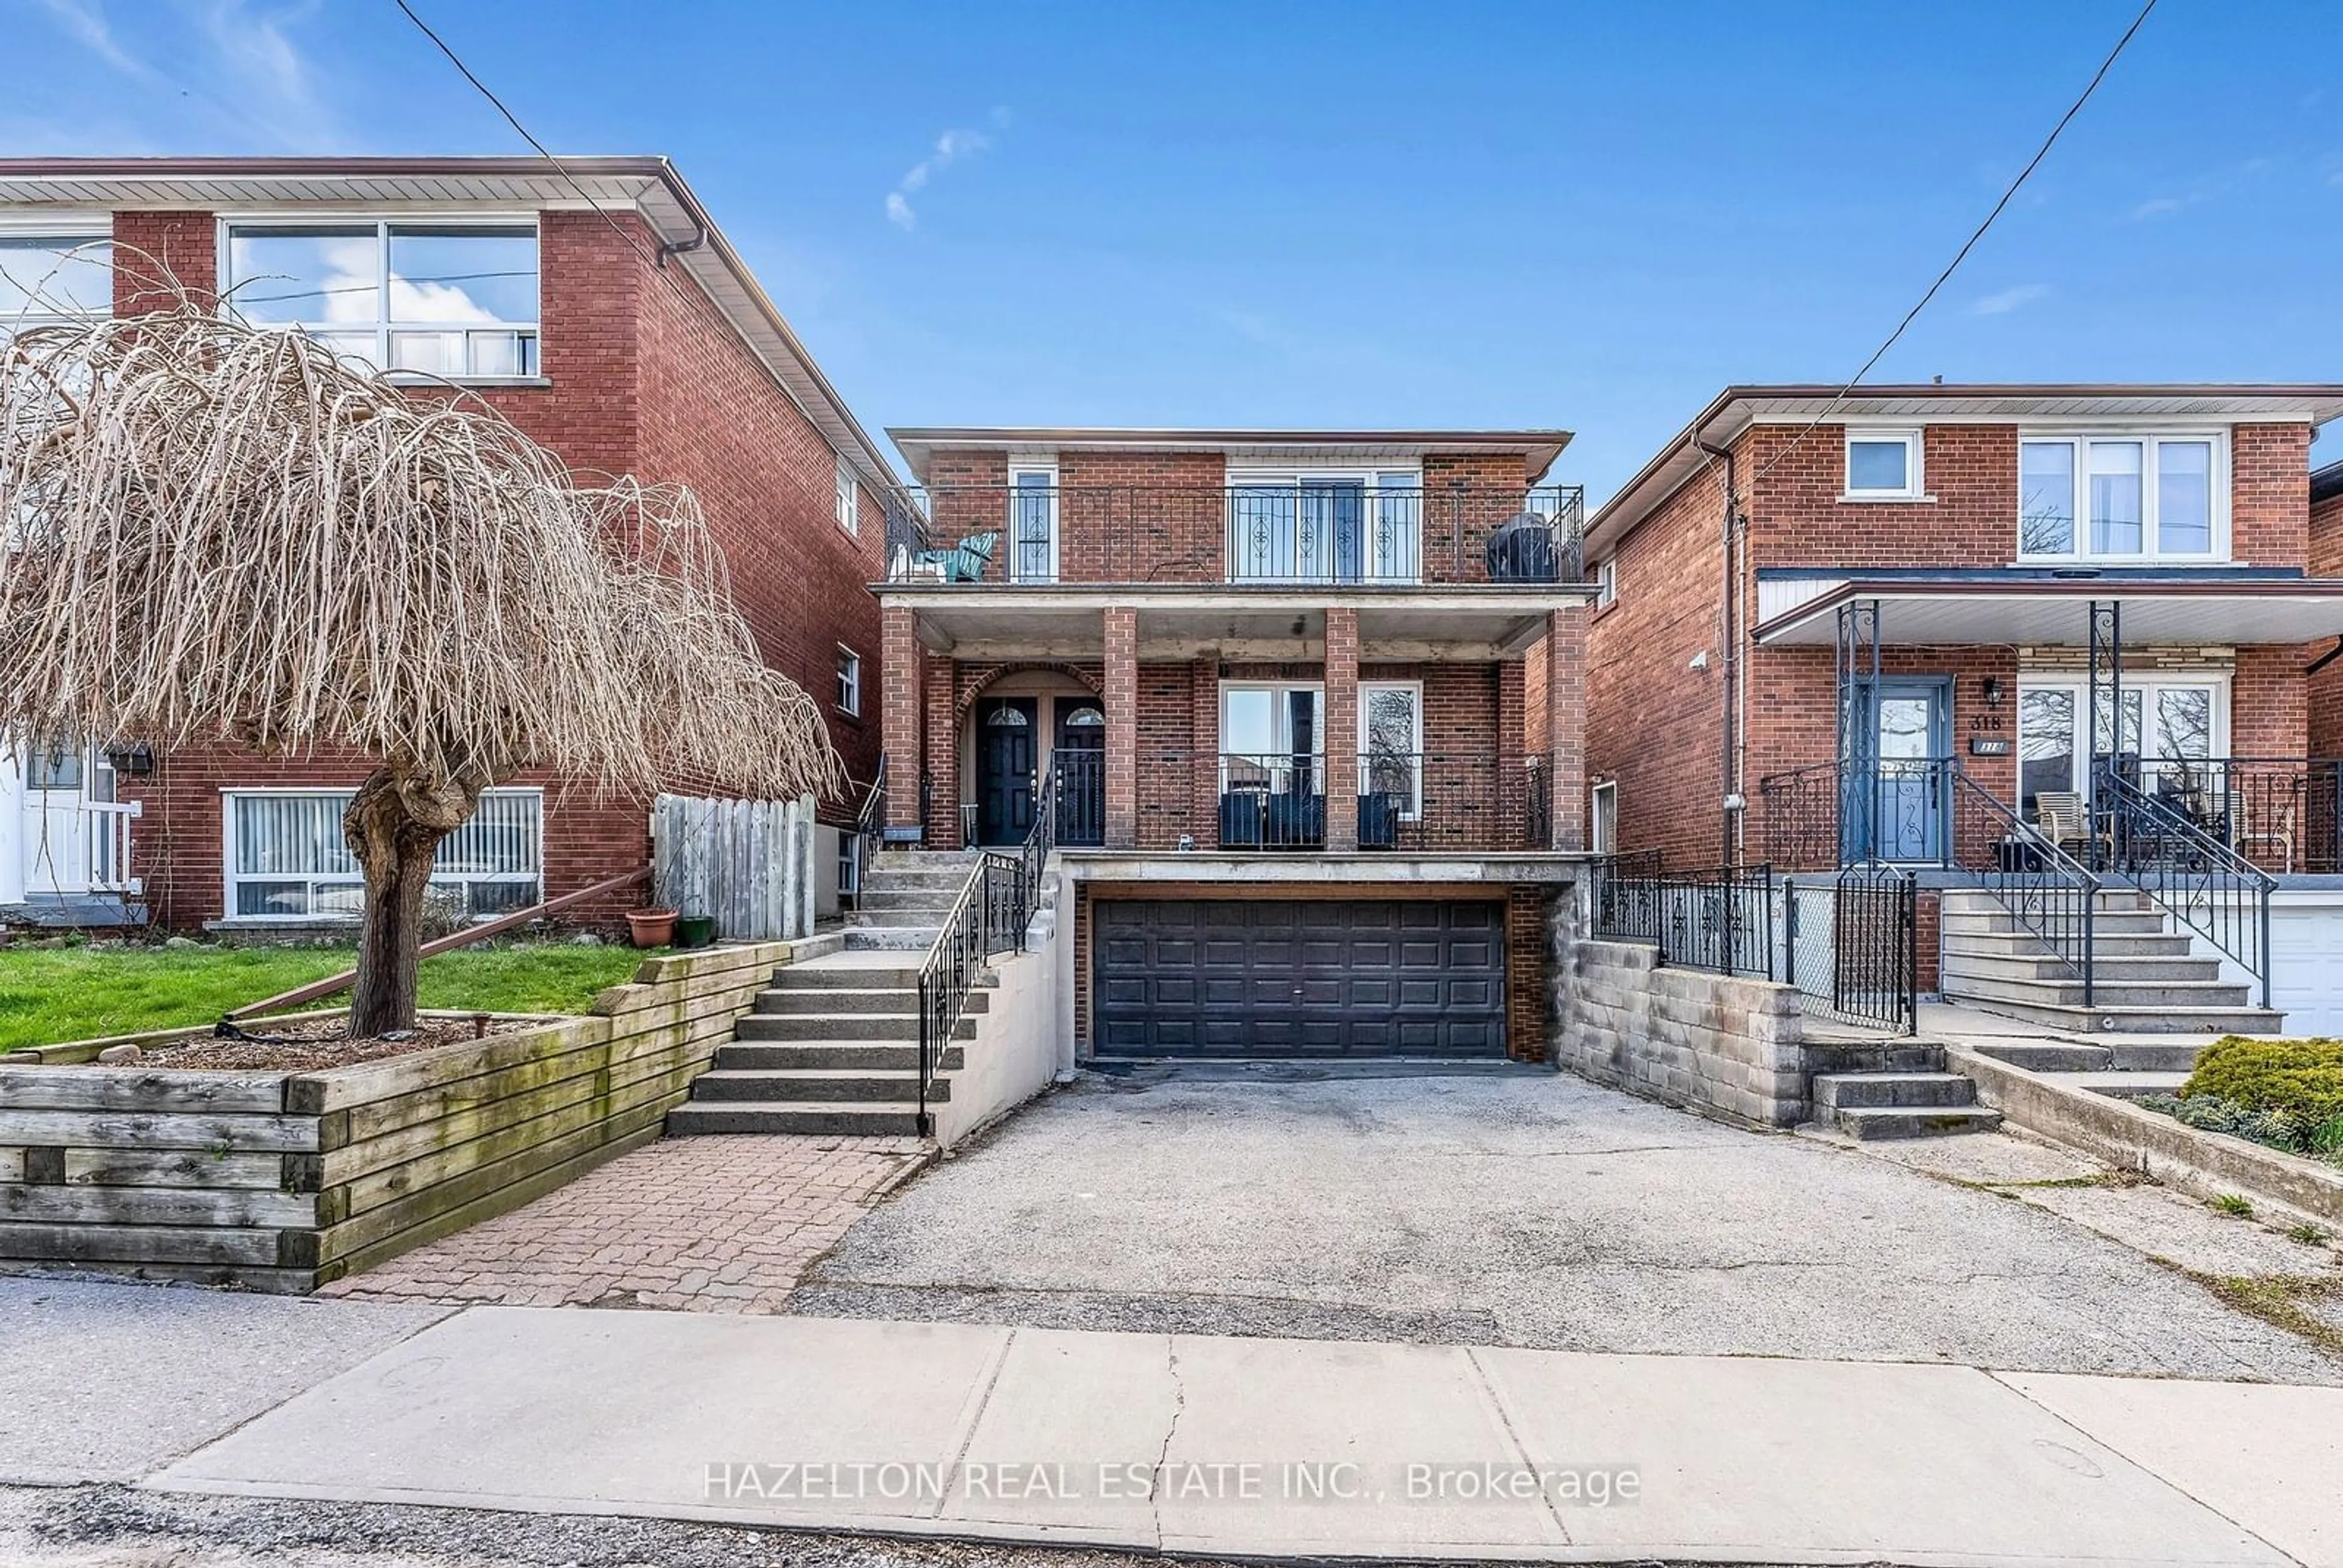 Home with brick exterior material for 314 Atlas Ave, Toronto Ontario M6C 3P9